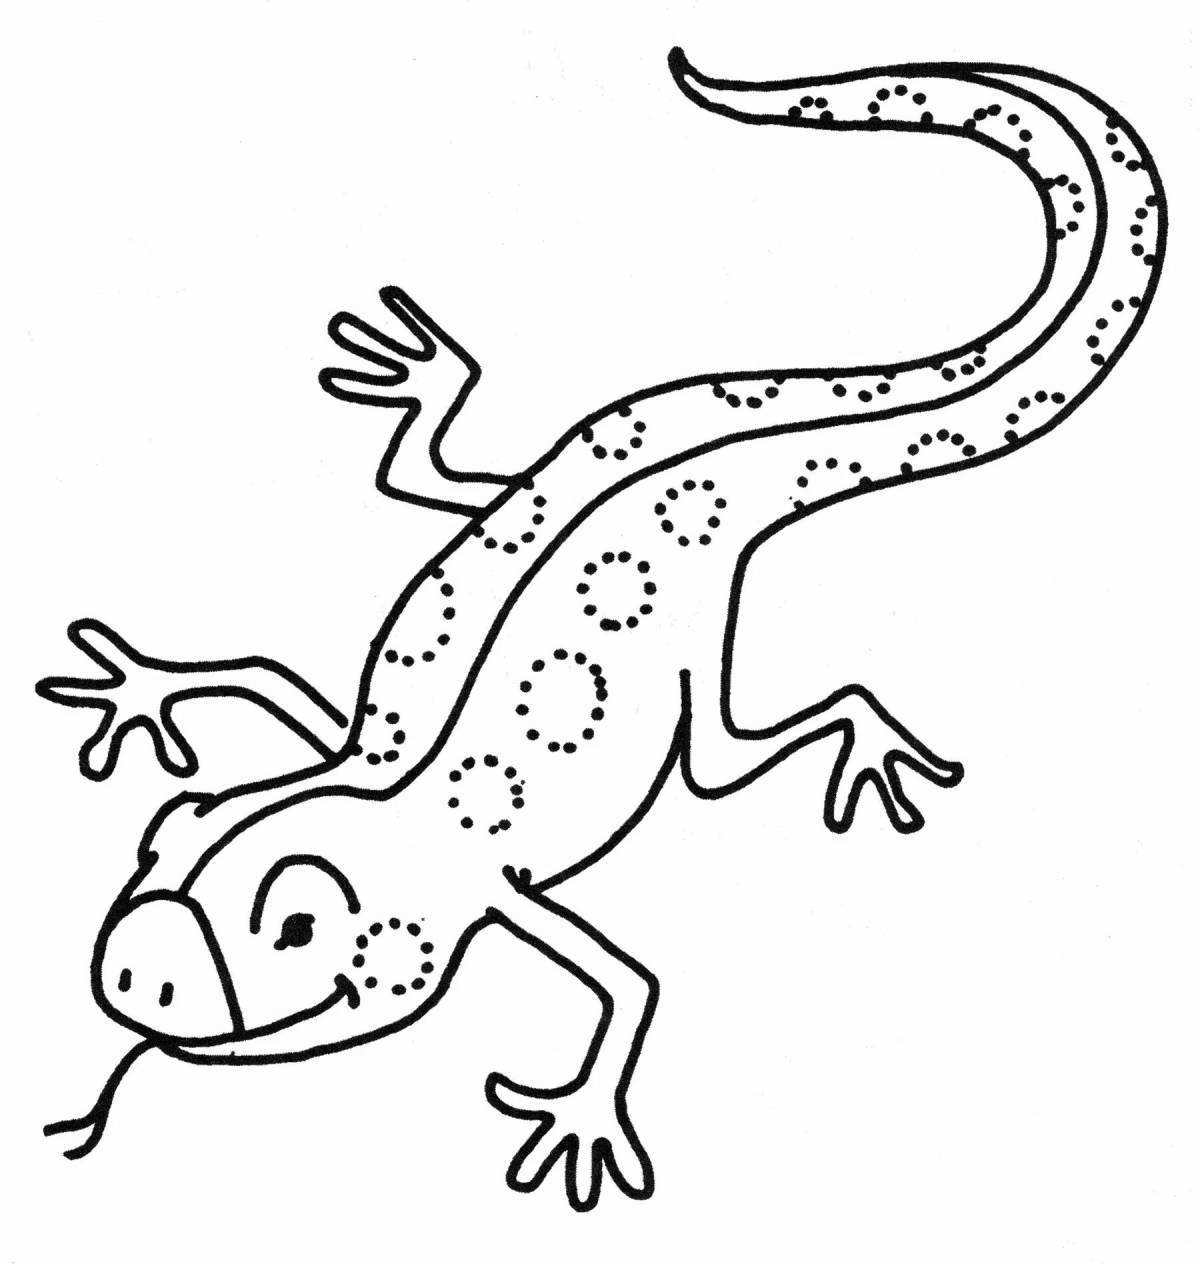 Joyful lizard coloring book